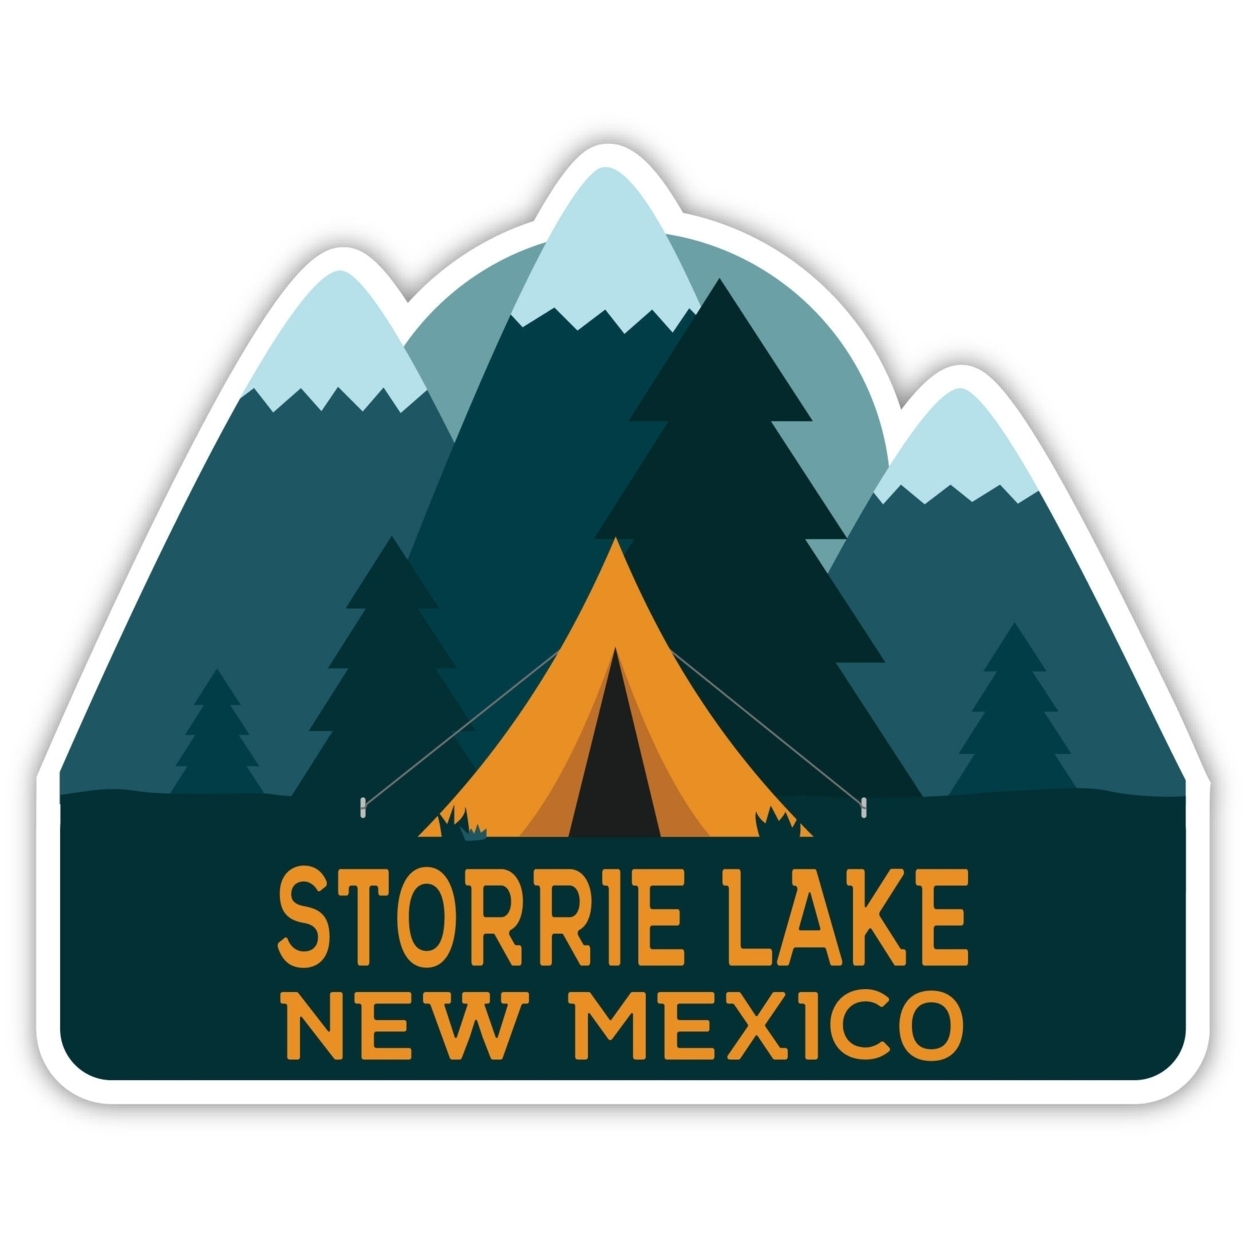 Storrie Lake New Mexico Souvenir Decorative Stickers (Choose Theme And Size) - Single Unit, 4-Inch, Tent